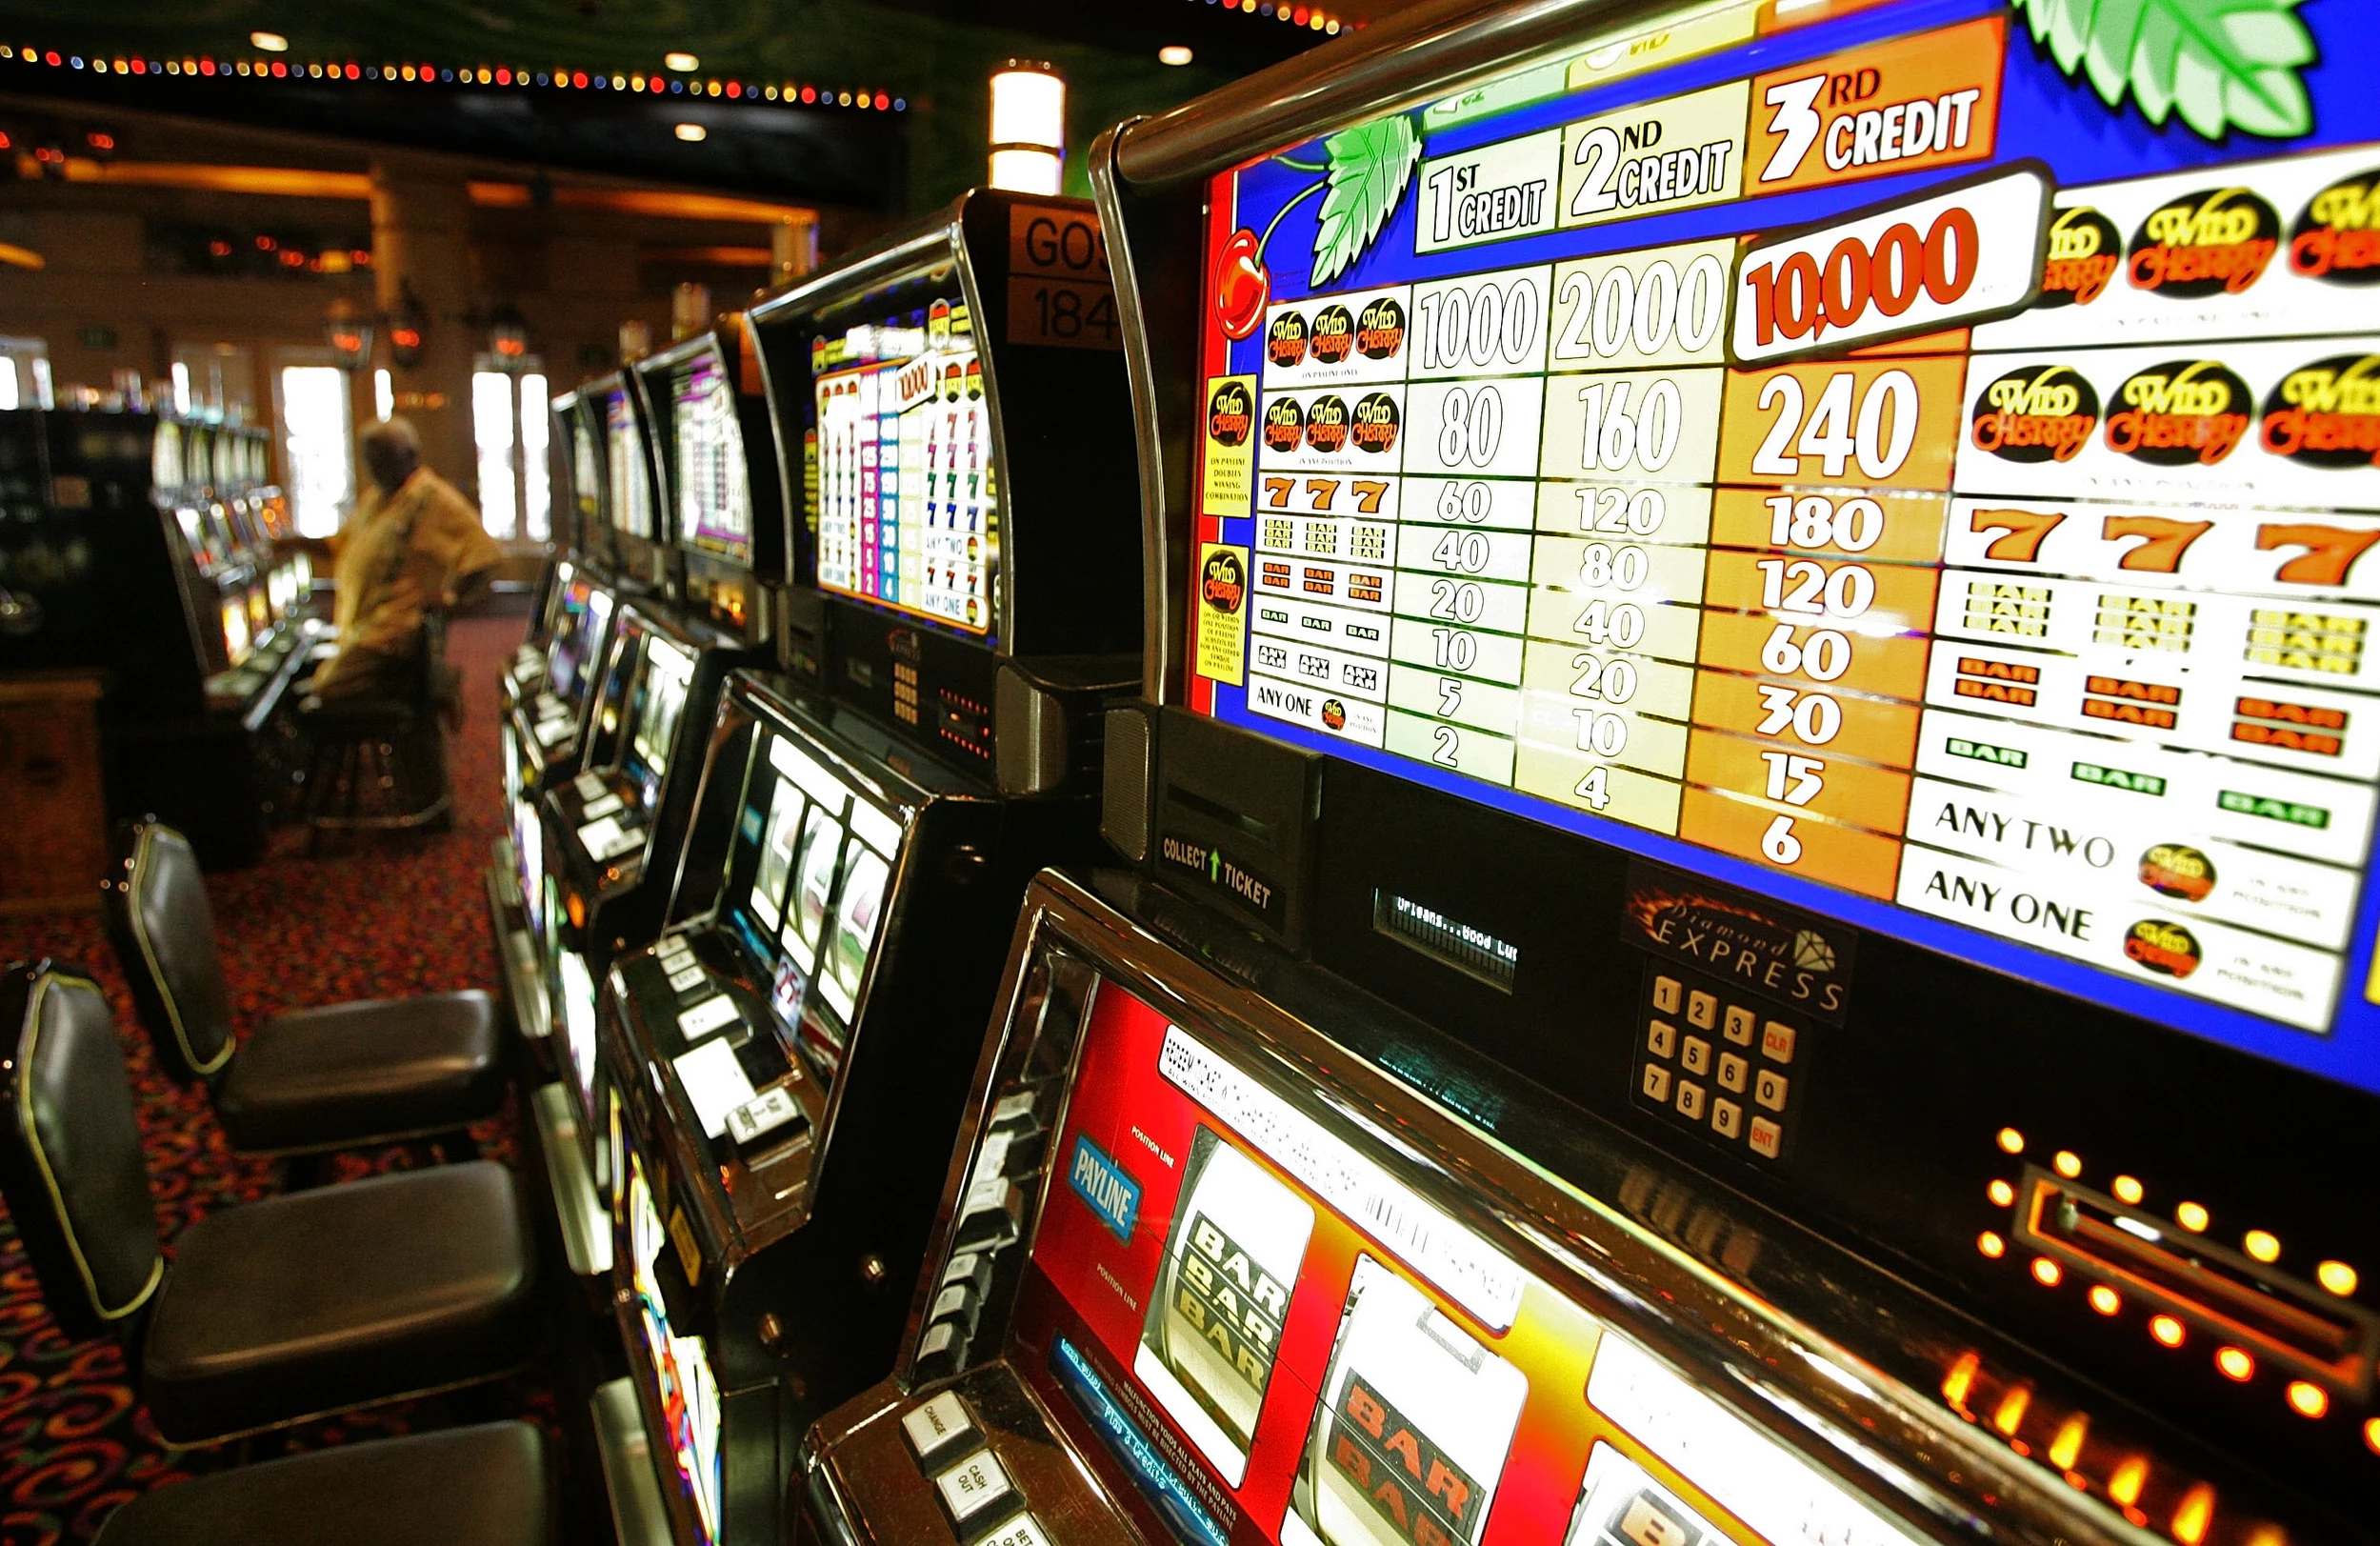 island resort casino michigan revenue